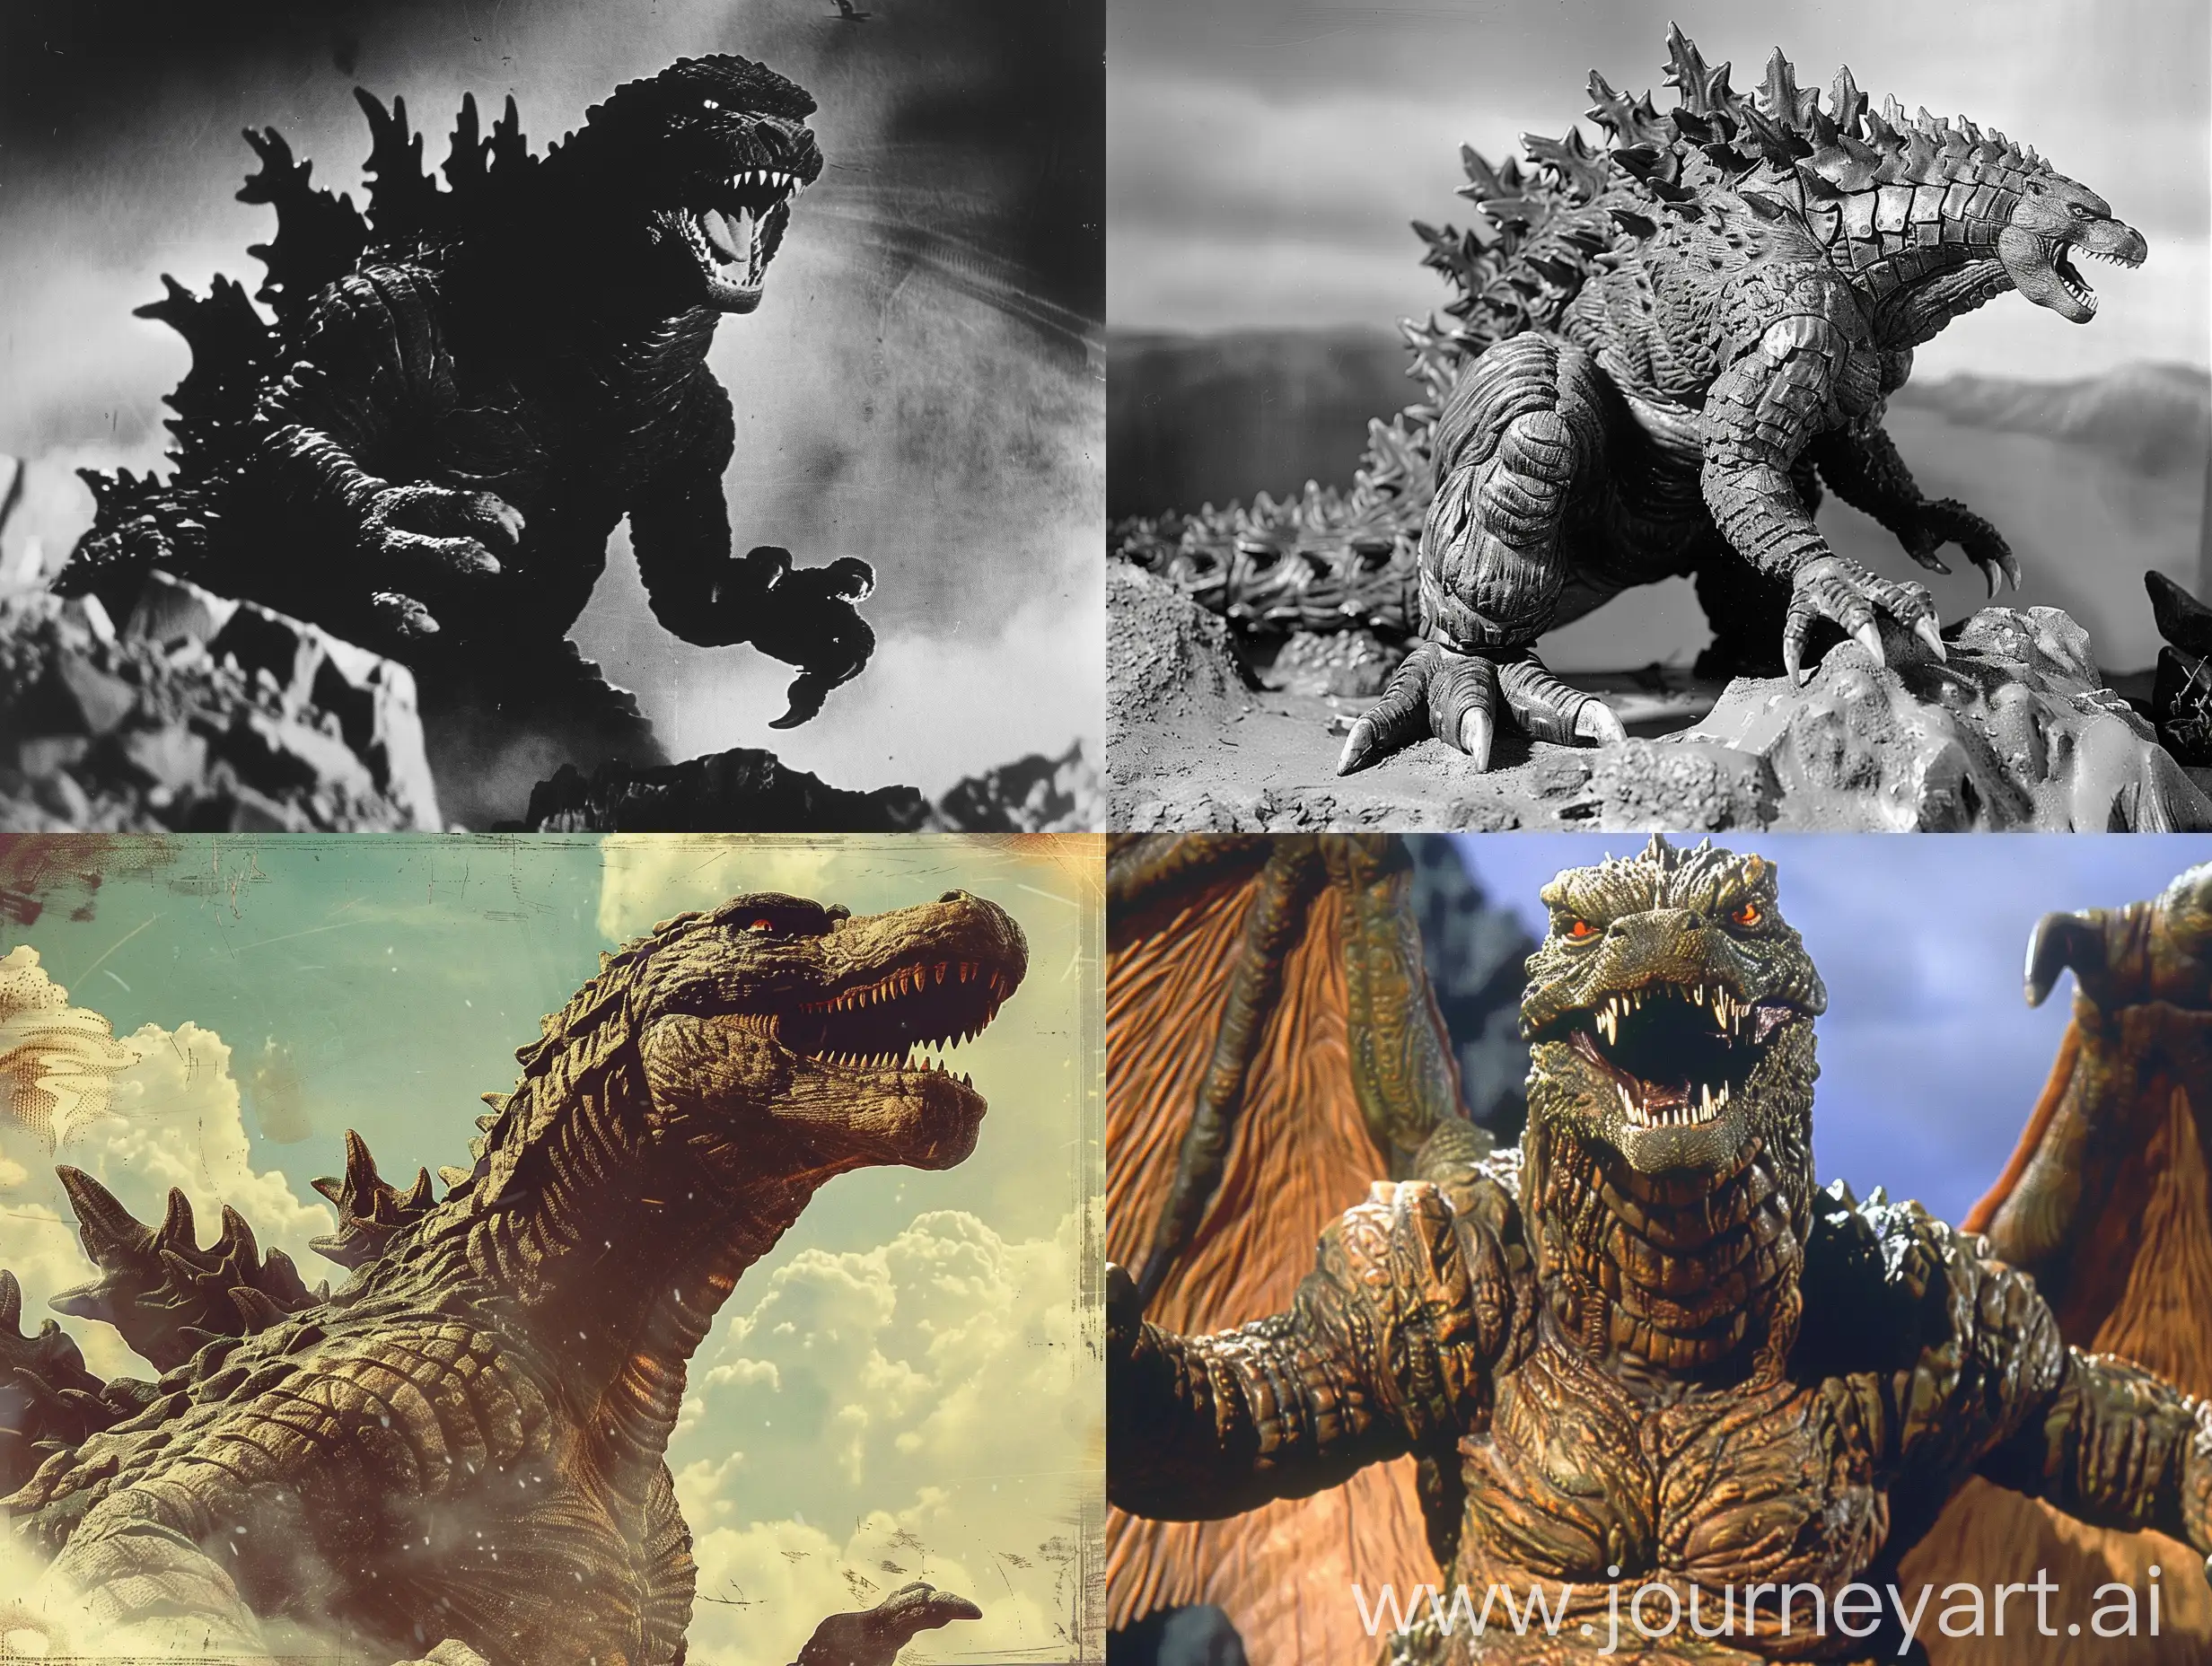  Godzilla in the style of Ray Harryhausen. 